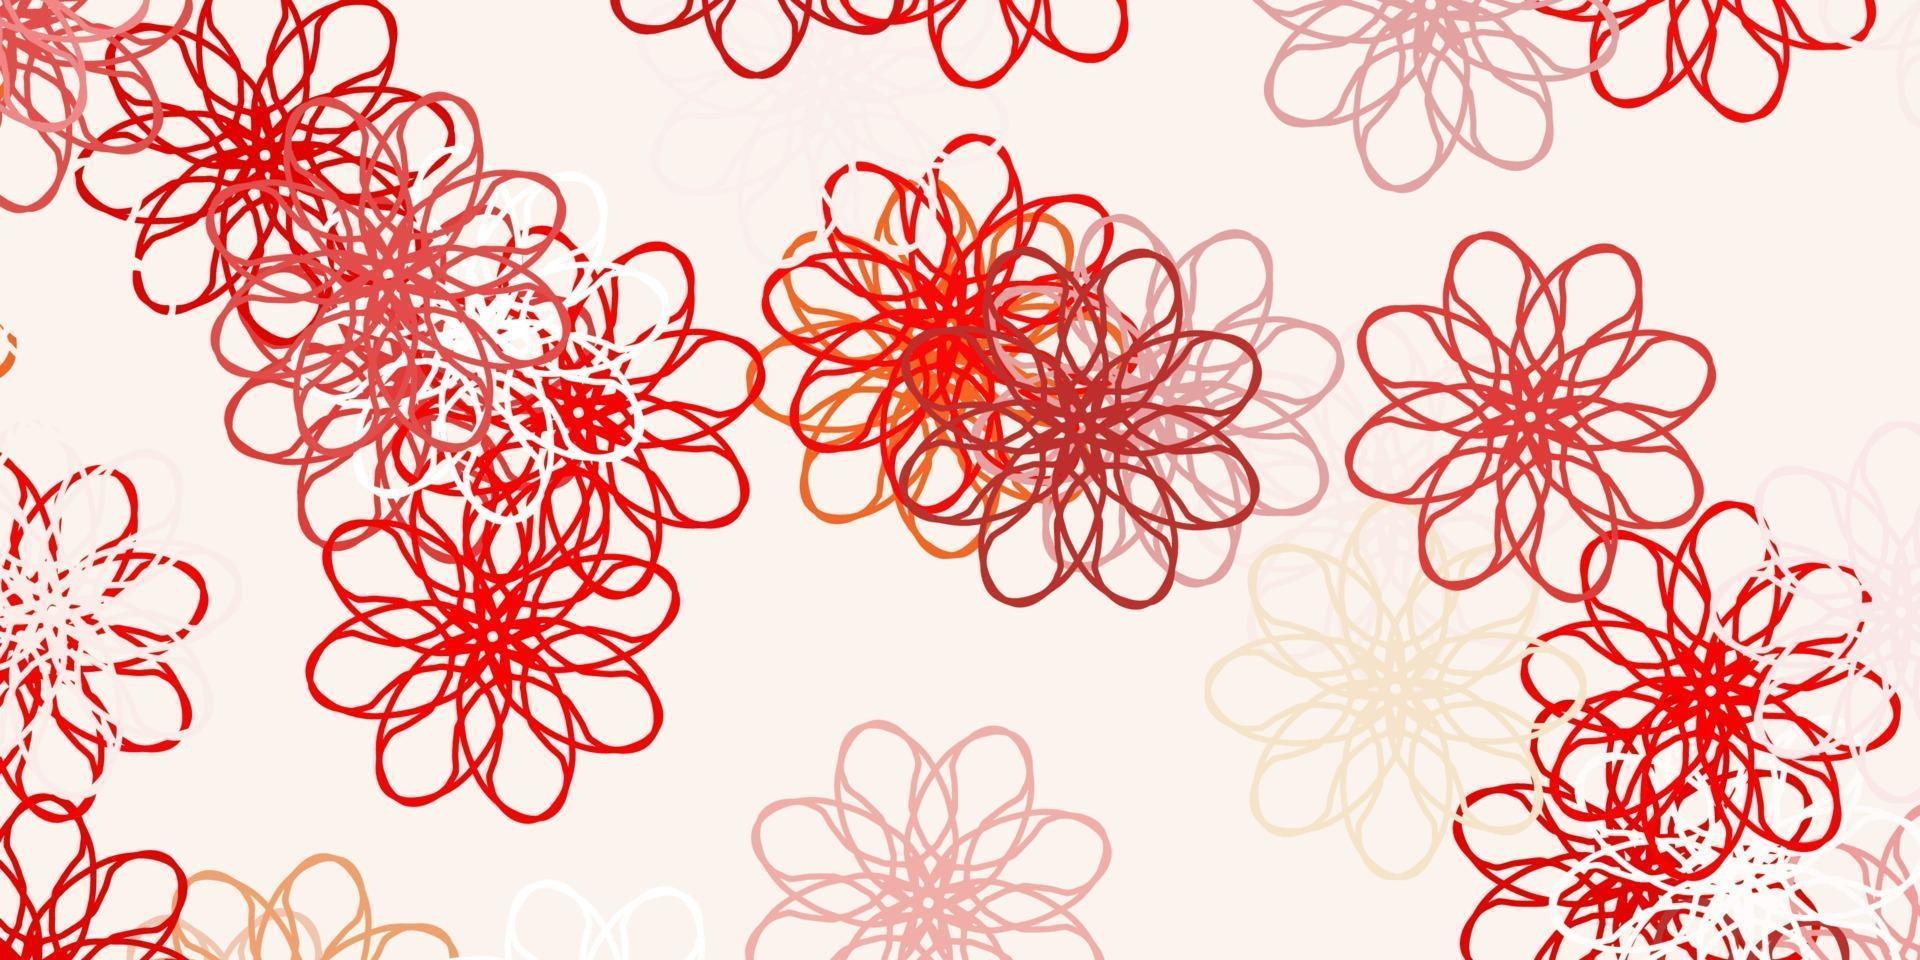 ljus orange vektor doodle bakgrund med blommor.